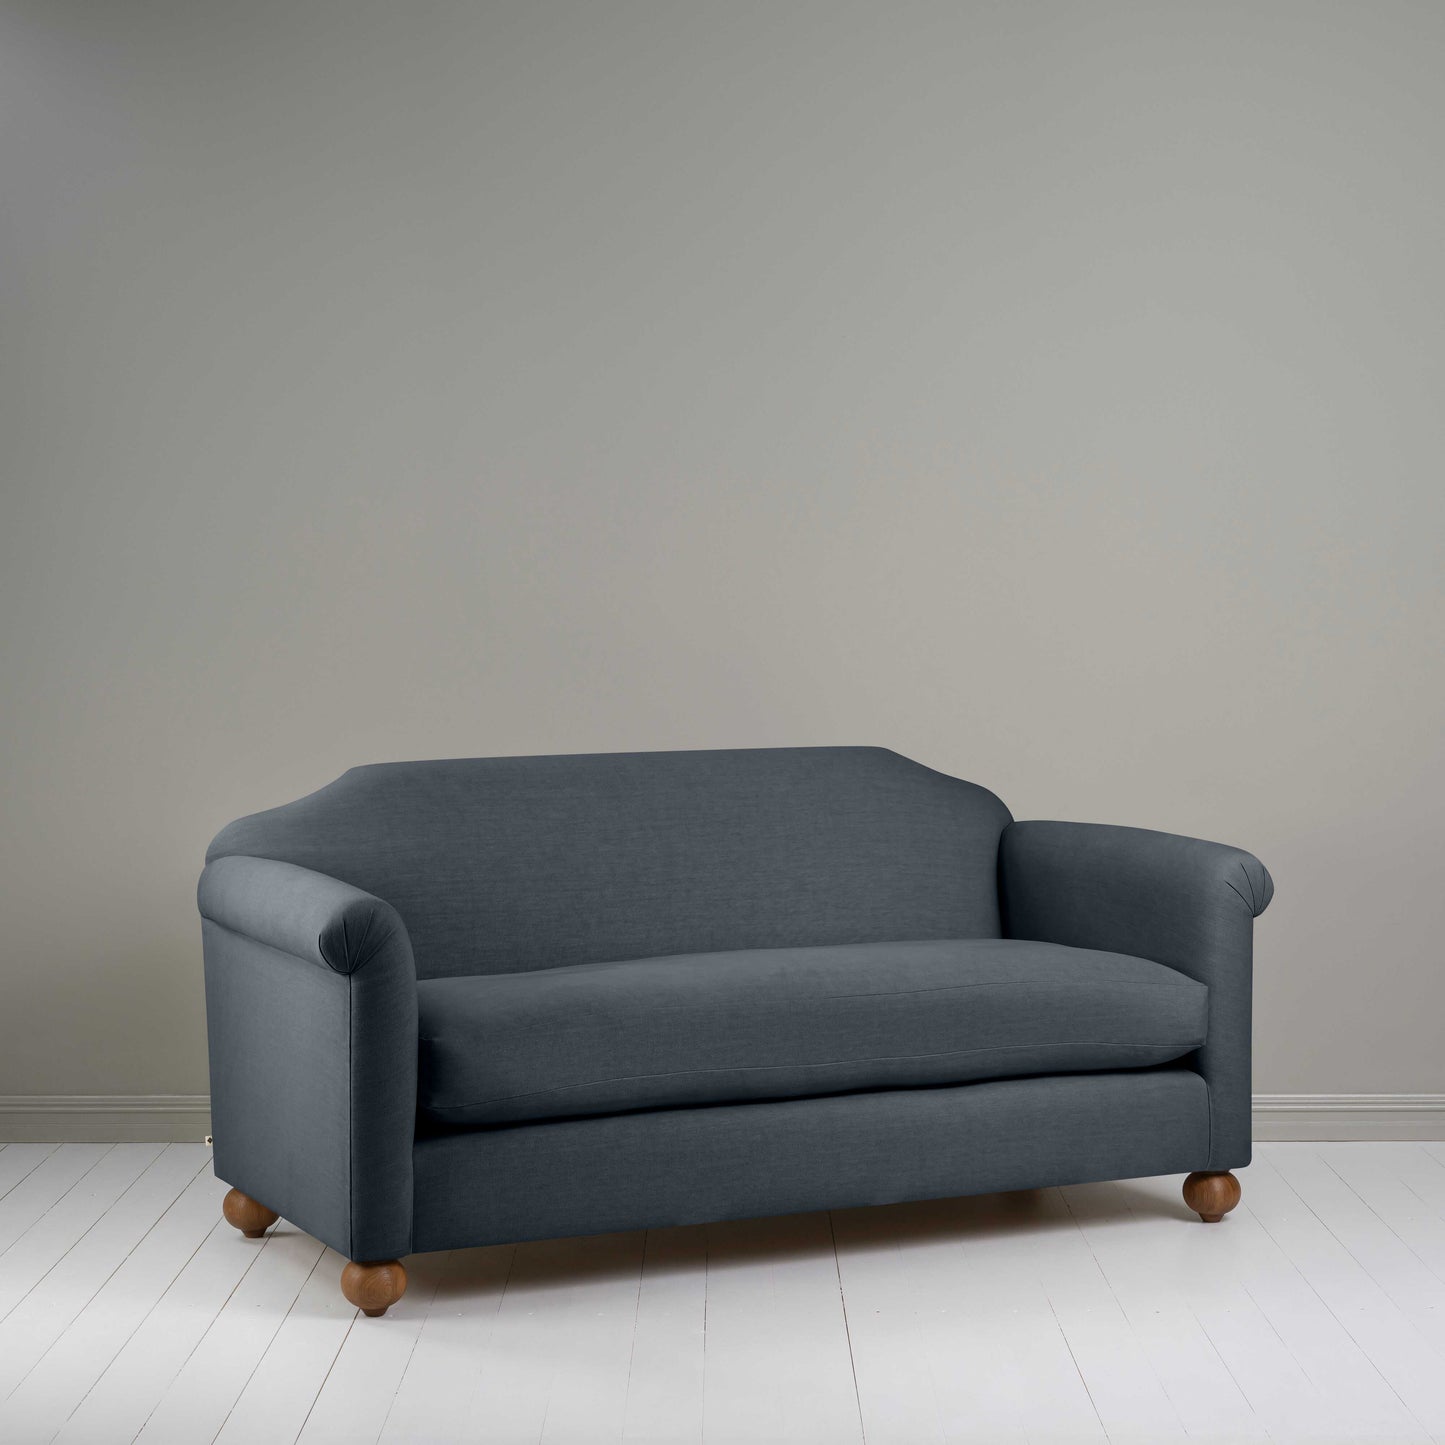 Dolittle 3 Seater Sofa in Laidback Linen Midnight - Nicola Harding